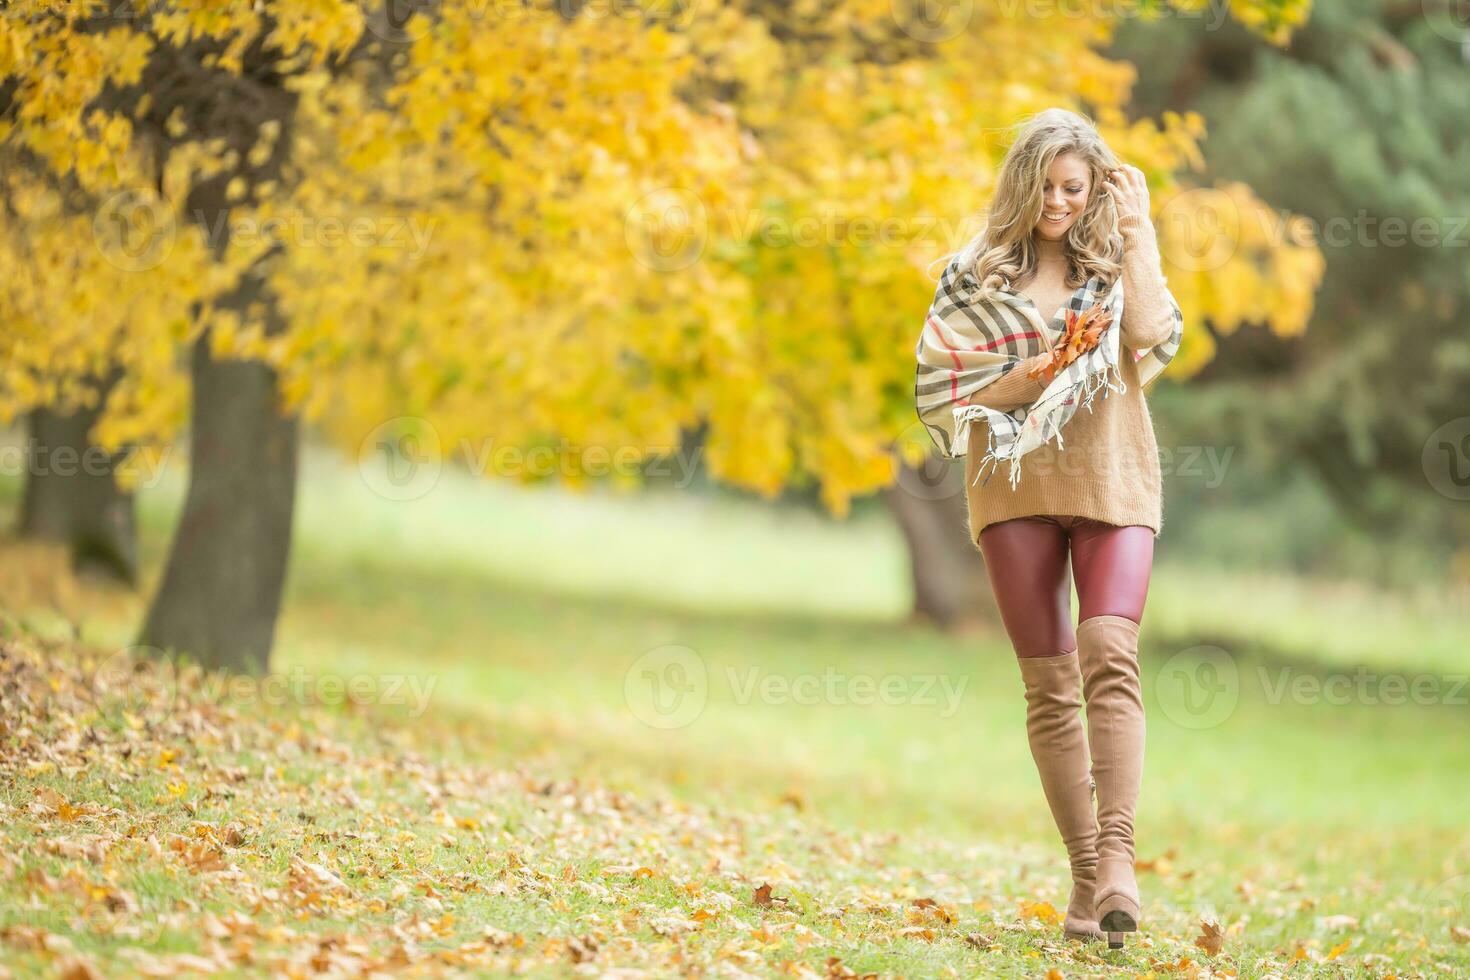 jong vrouw in herfst kleding emotioneel wandelen in park foto